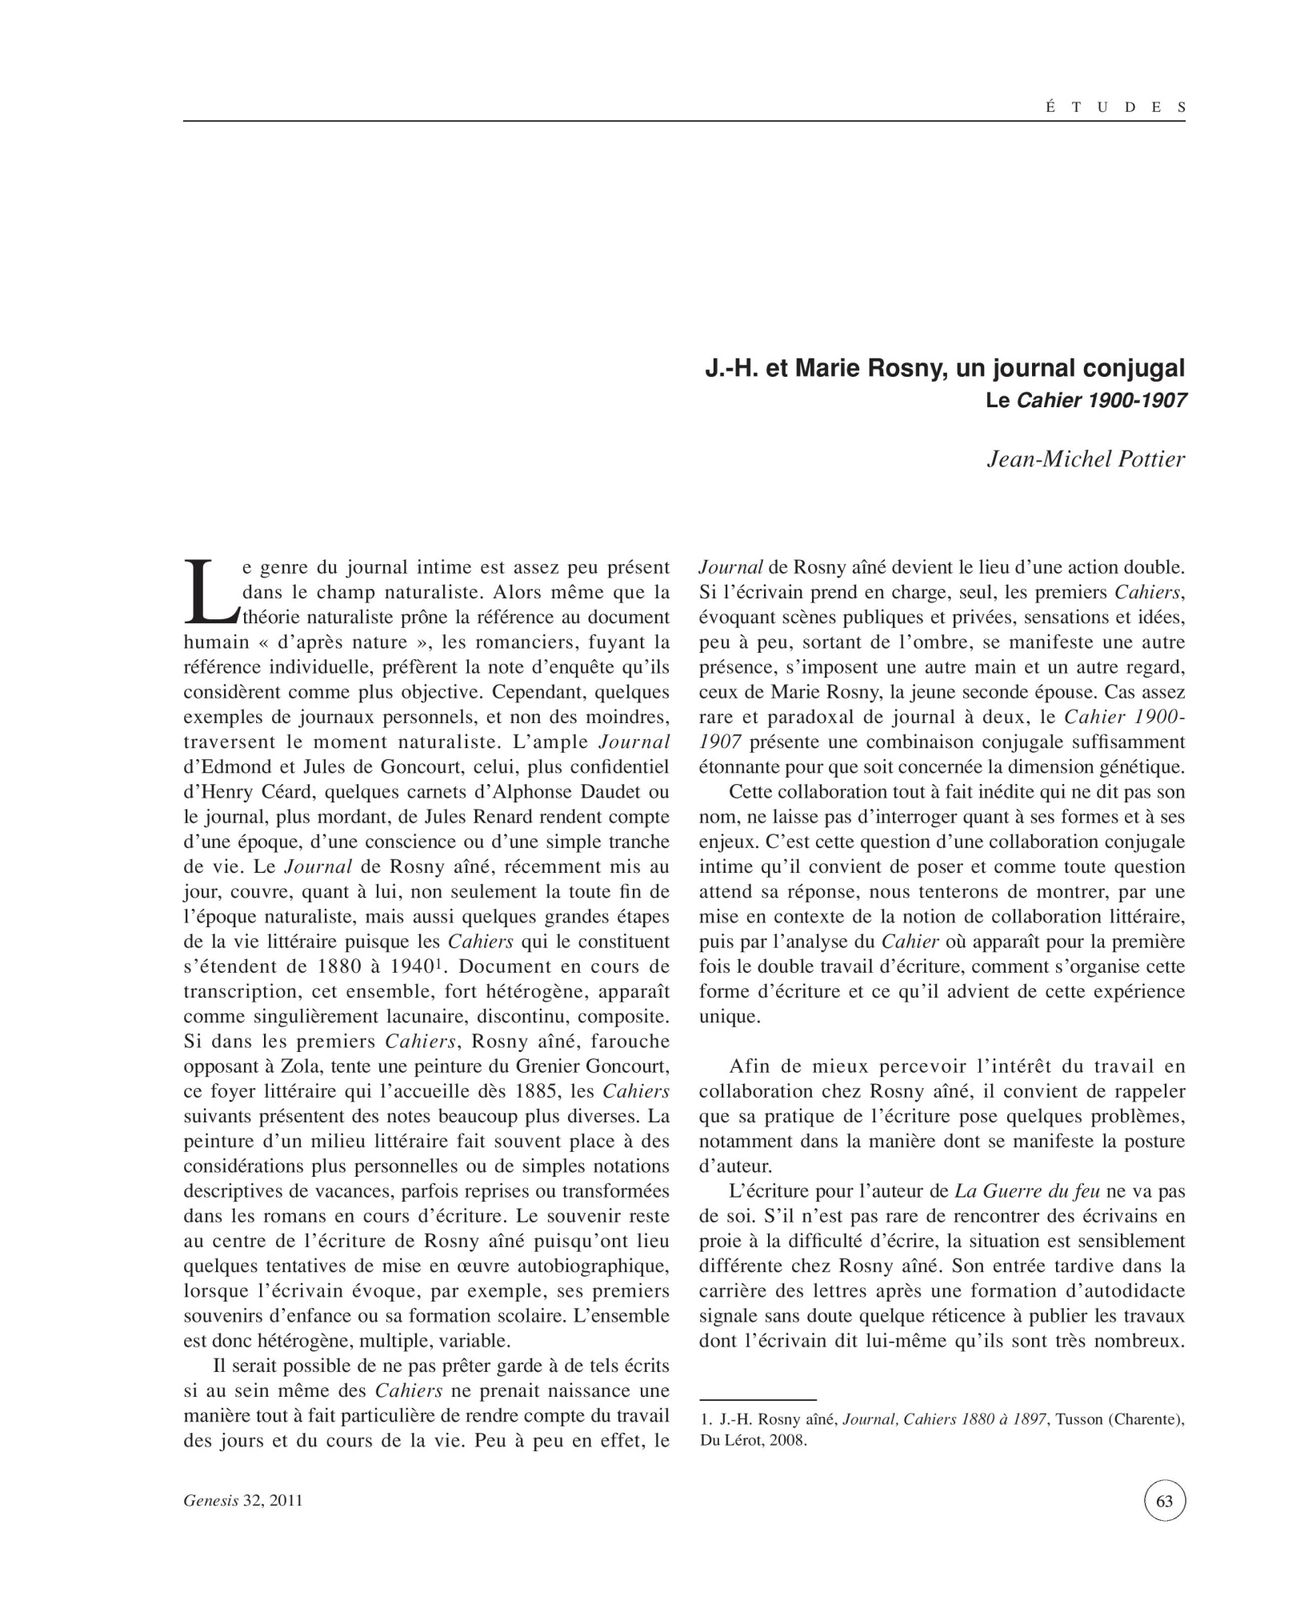 Jean-Michel Pottier "J.-H. et Marie Rosny, un journal conjugal. Le Cahier 1900-1907" in Genesis n°32 : Journaux personnels (2011)